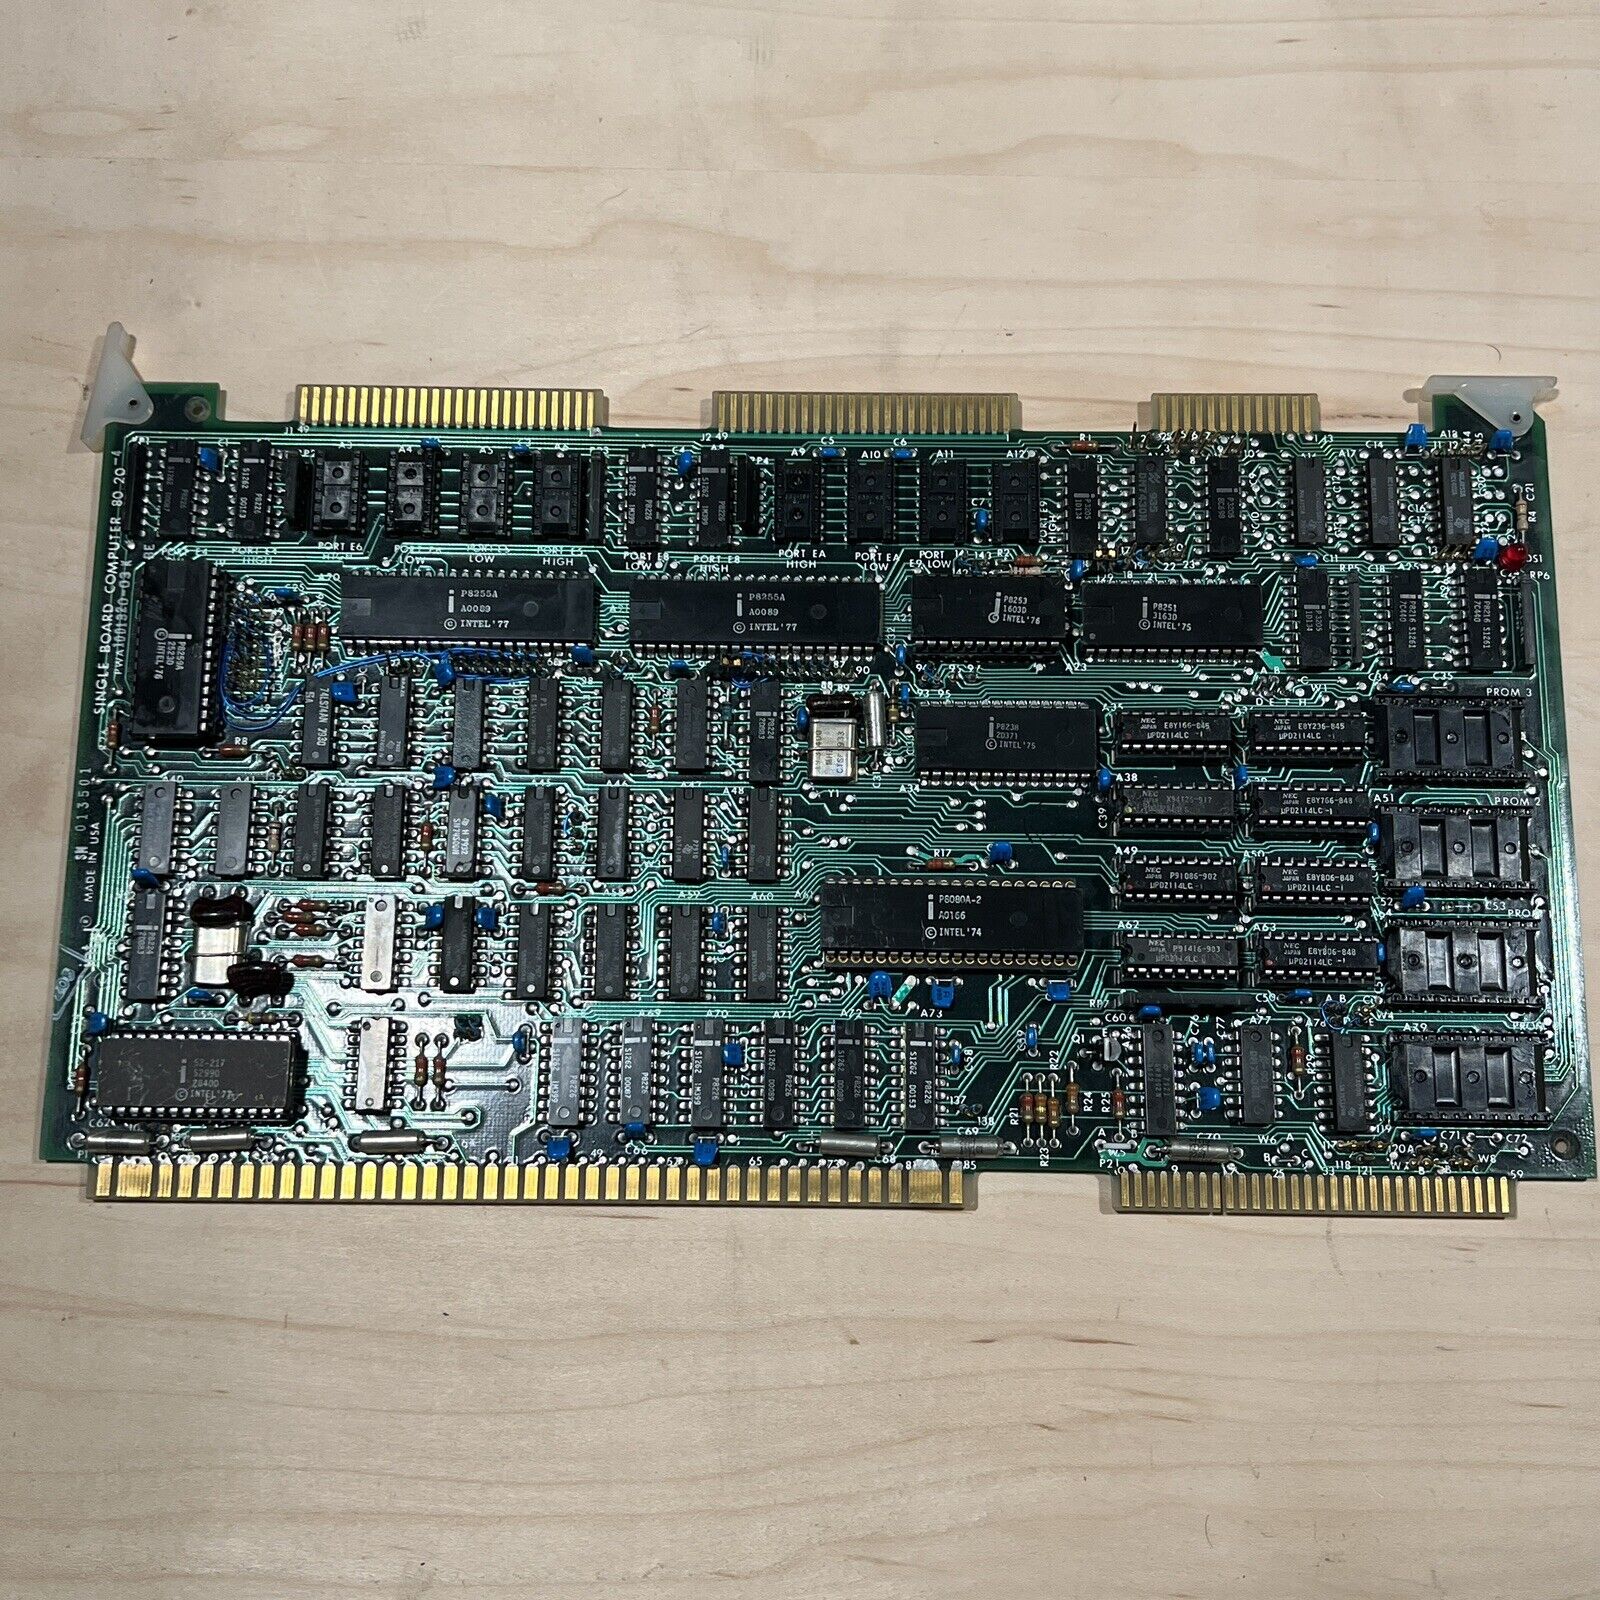 Vintage 1978 Intel Intellec MDS-800 8080A Single Board Computer - PWA 1001320-3